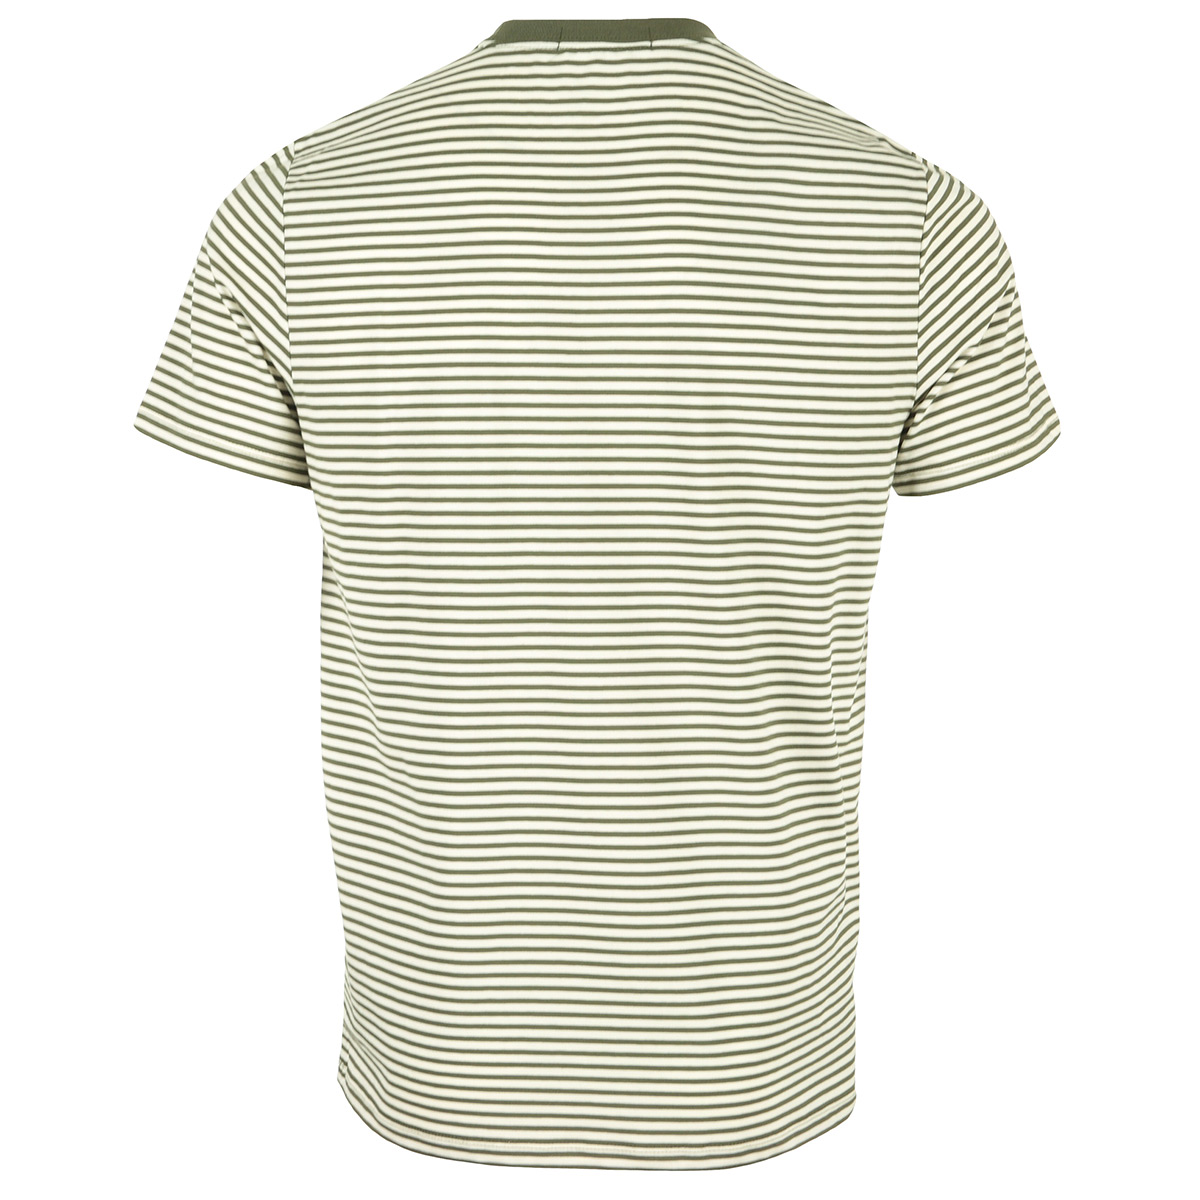 Two Colour Stripe T-Shirt